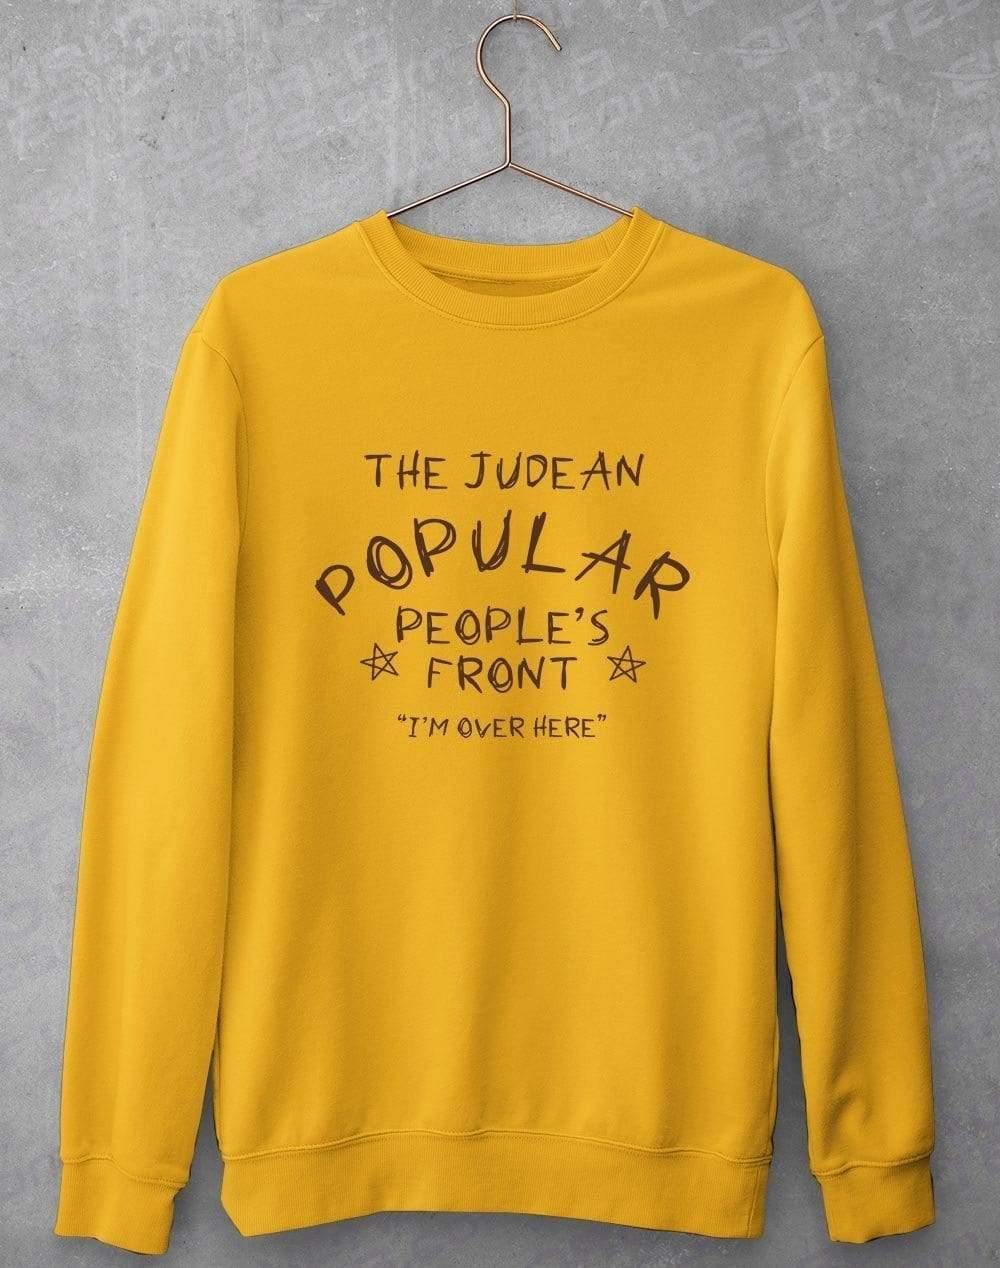 Judean Pupular Peoples Front Sweatshirt S / Gold  - Off World Tees